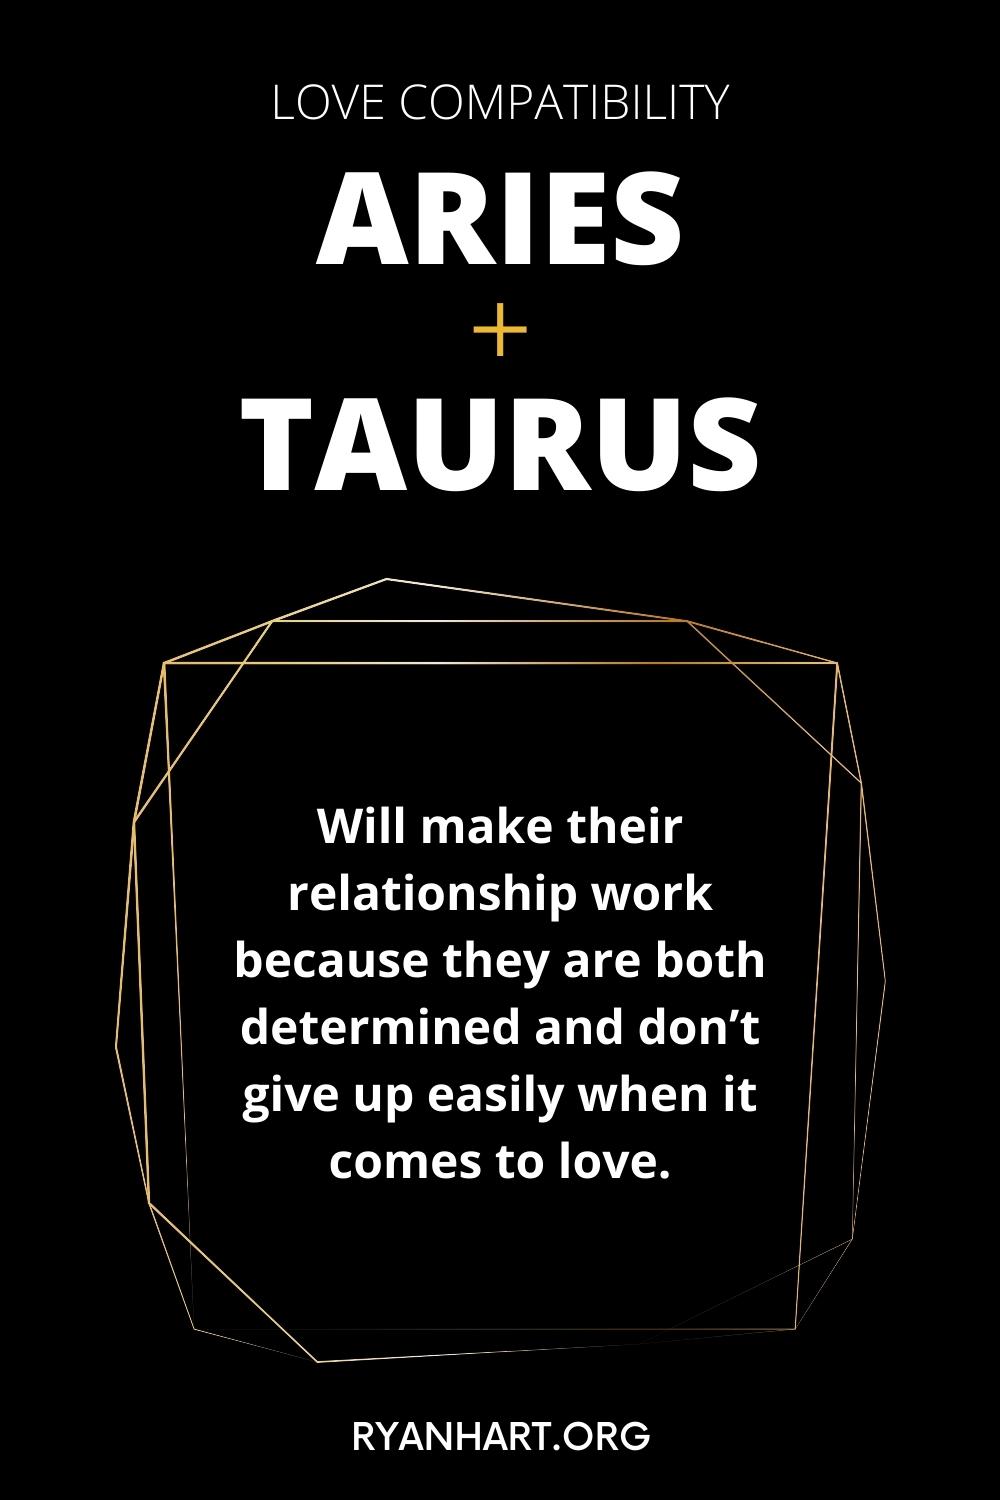 taurus marriage horoscope 2024